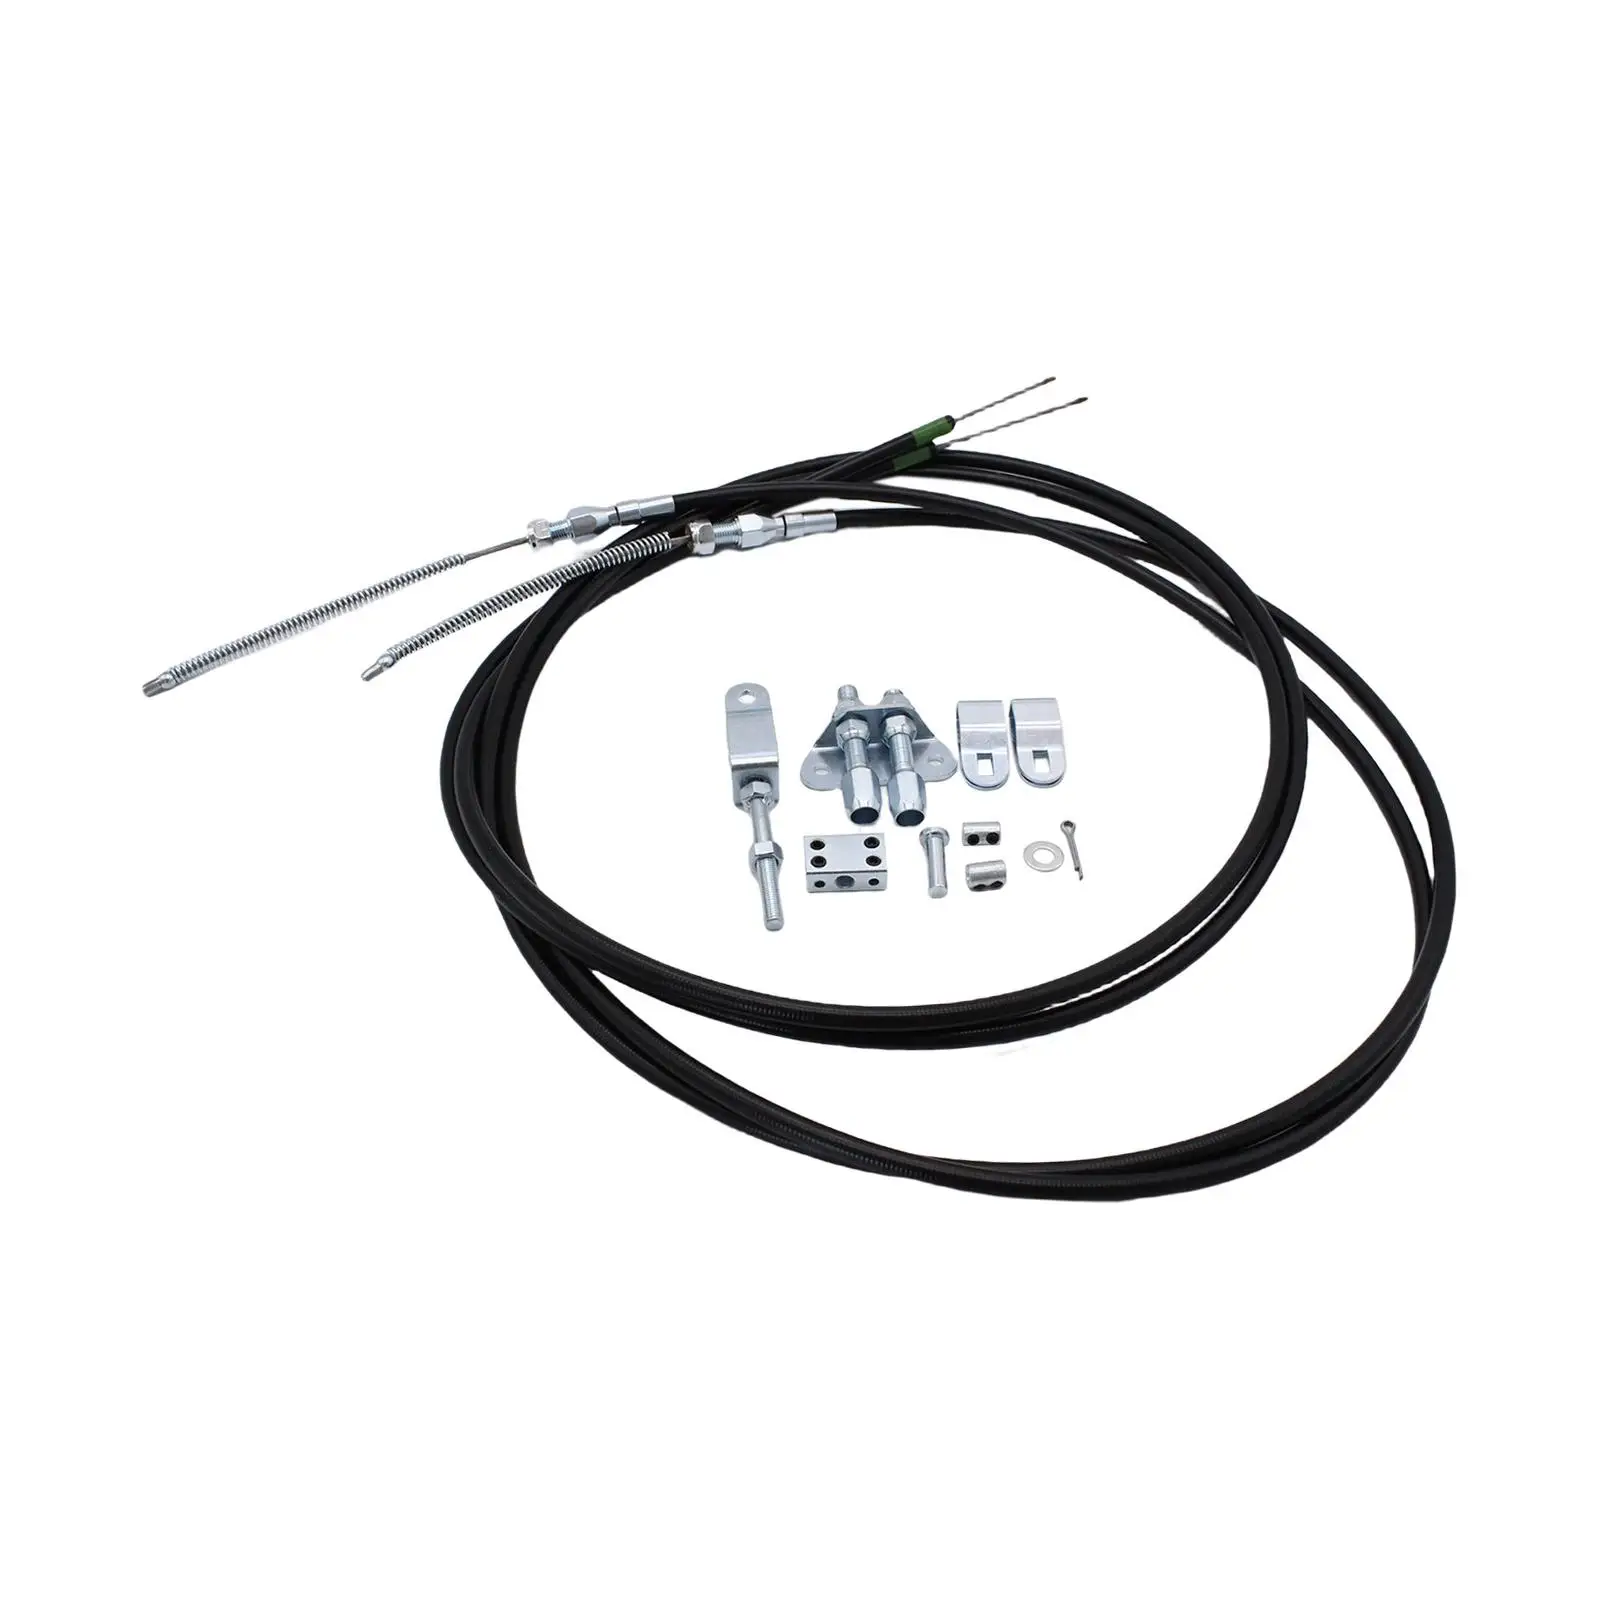 Automotive Universal Parking Brake Cable Kit 330-9371 for Internal Drum Brake Assemblies Accessories Replaces Flexible Durable